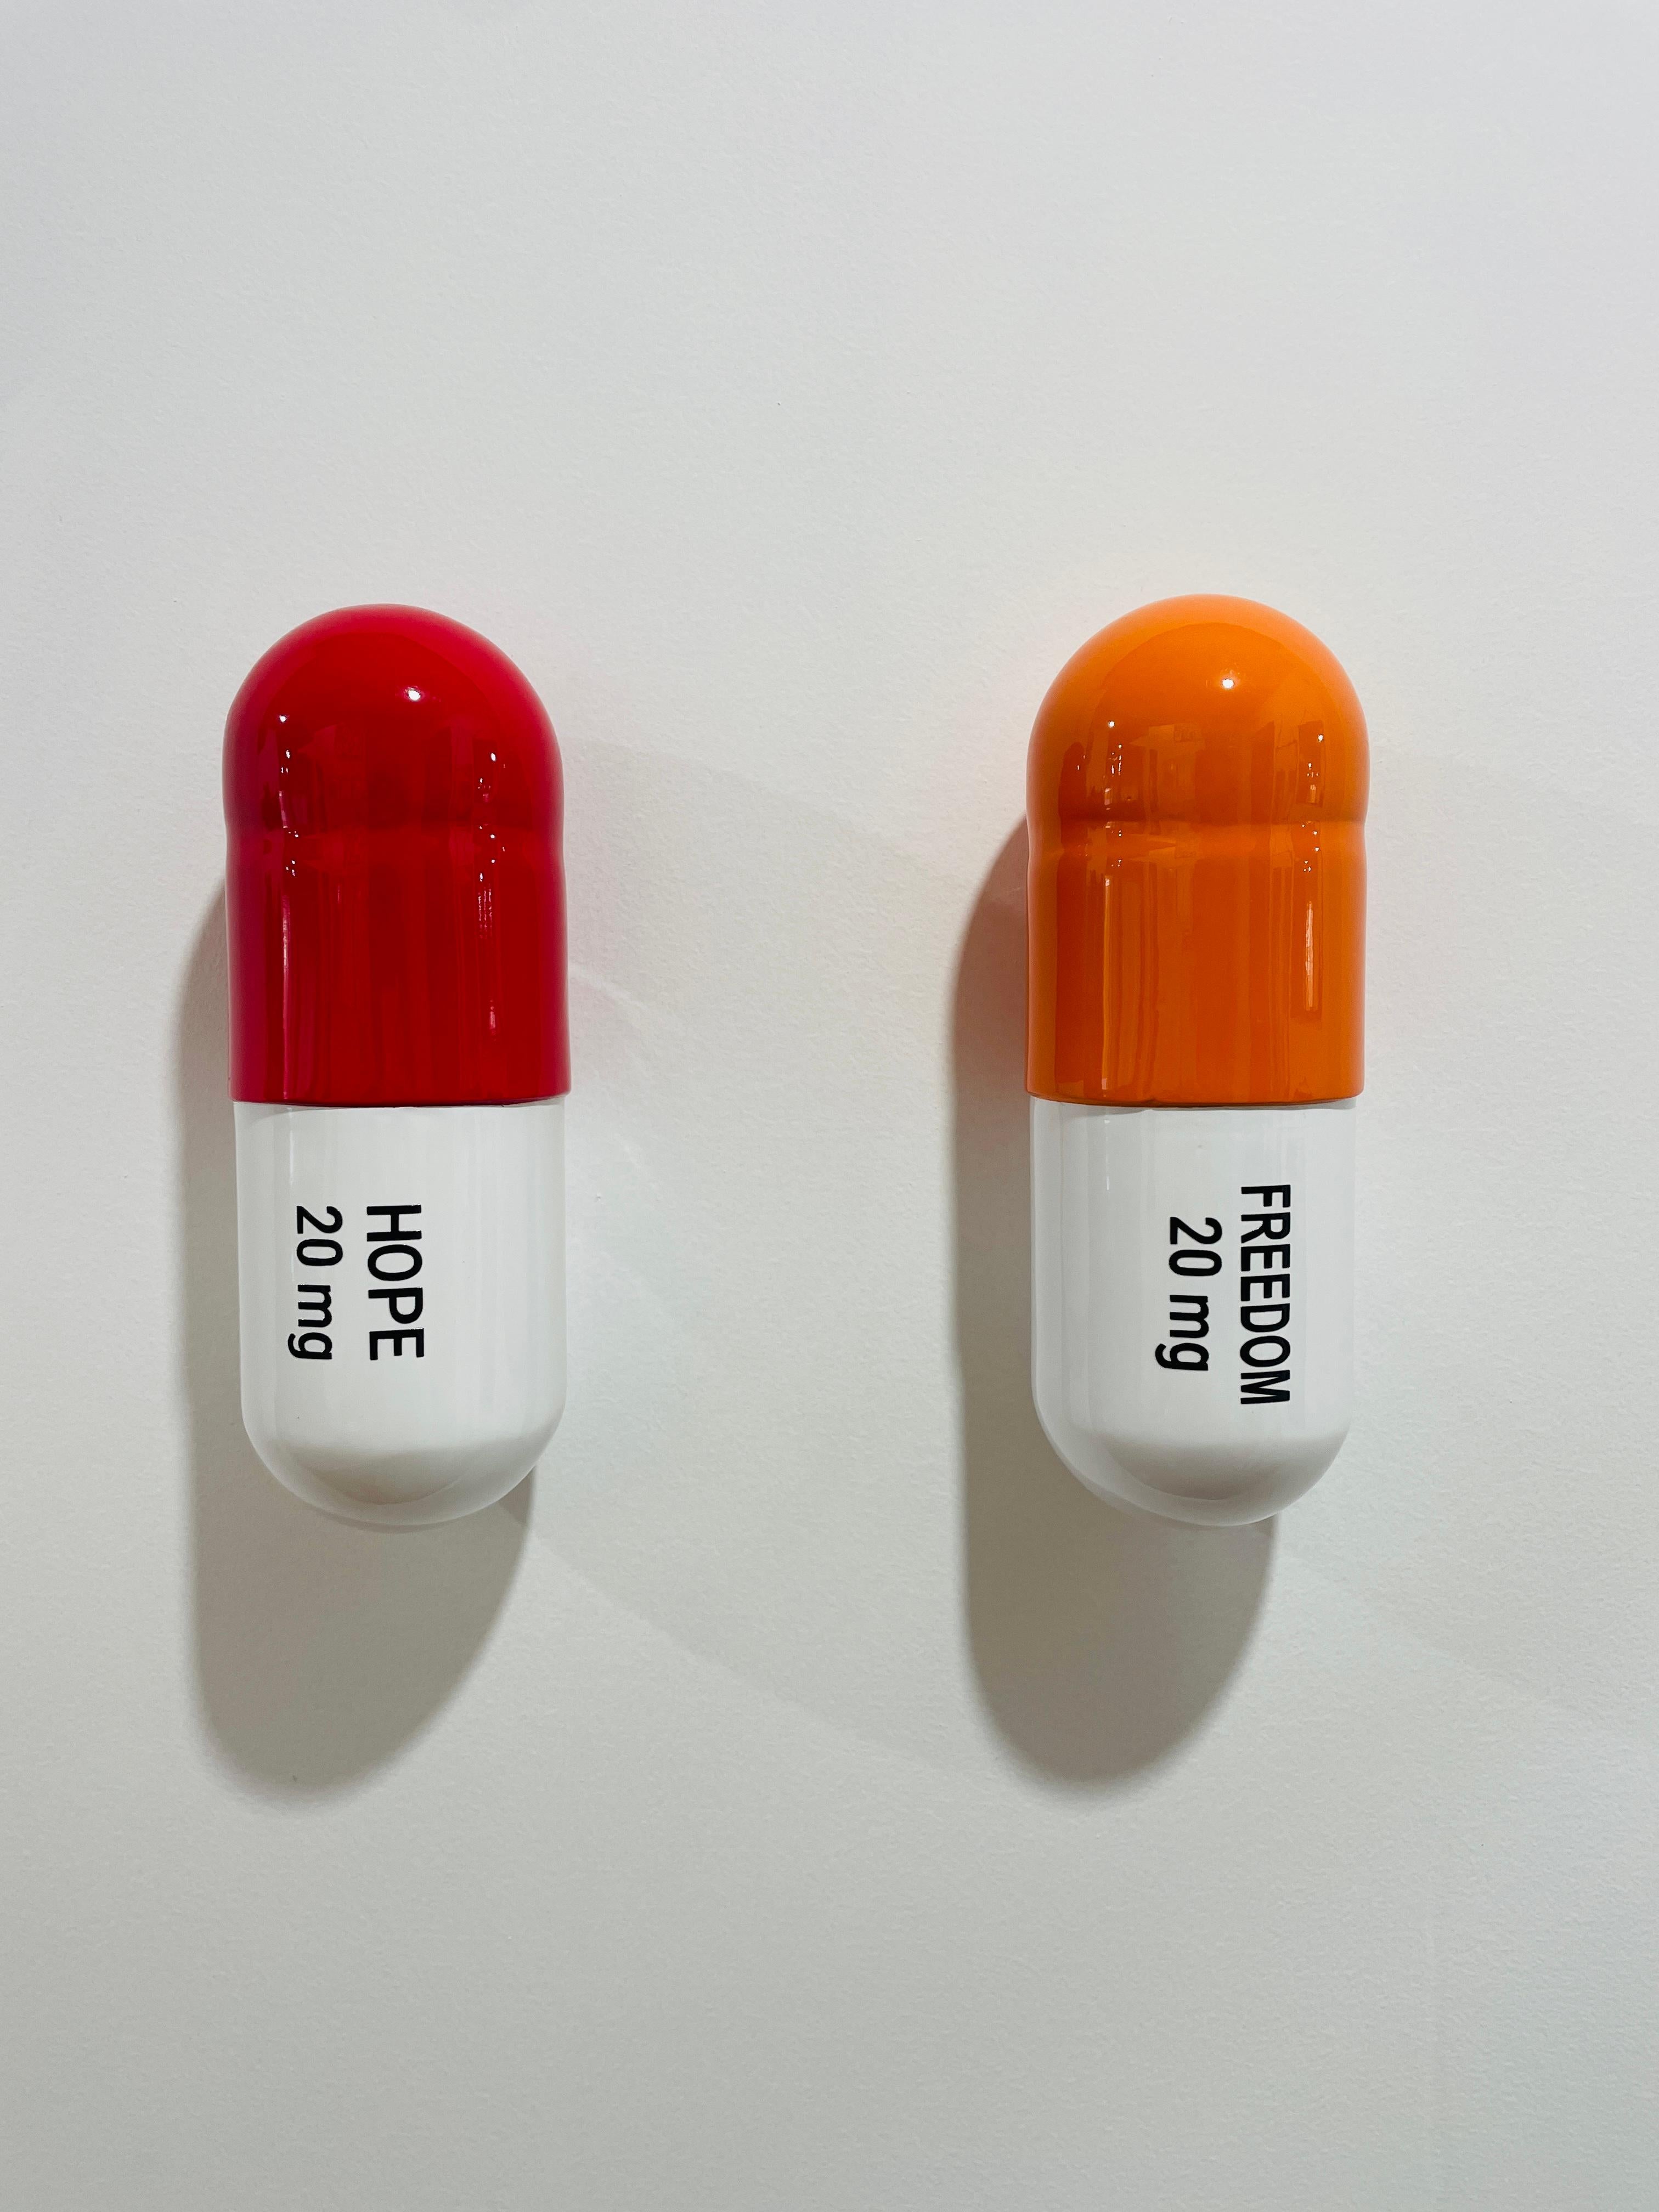 Still-Life Sculpture Tal Nehoray - 20 MG Hope pill Combo (rouge, orange, blanc) - sculpture figurative